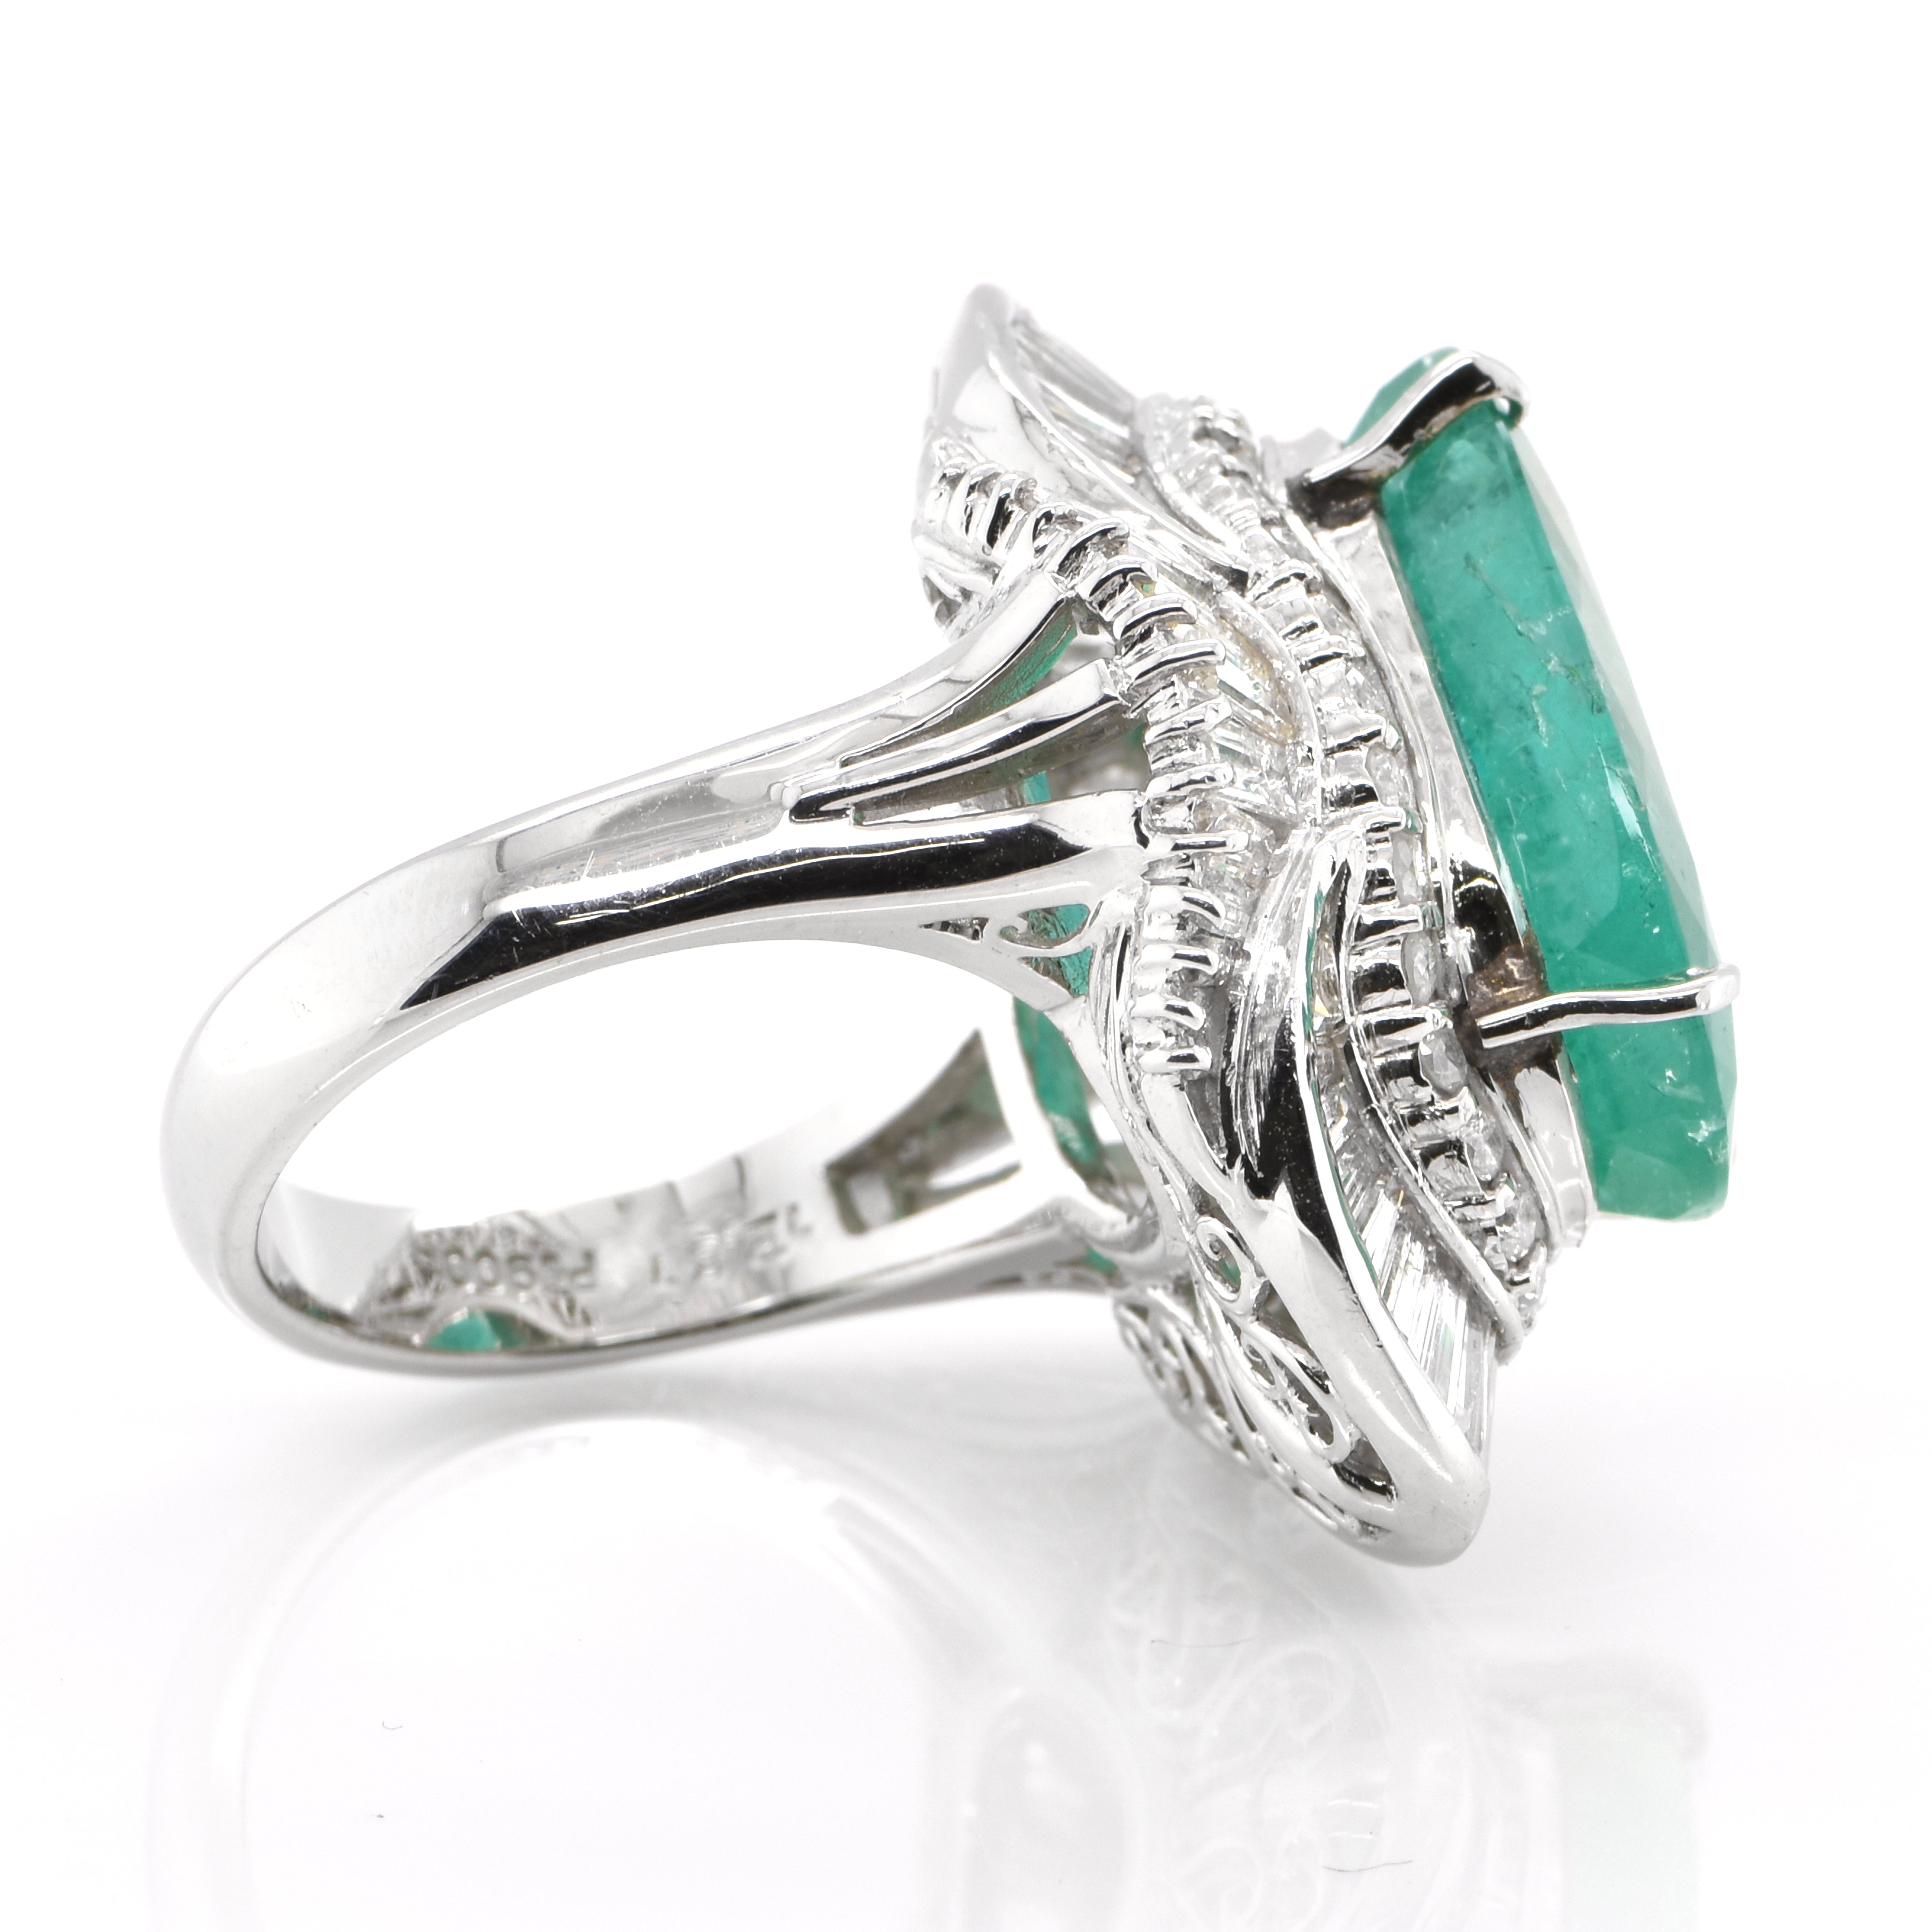 12.81 Carat Natural Emerald and Diamond Cocktail Ring set in Platinum